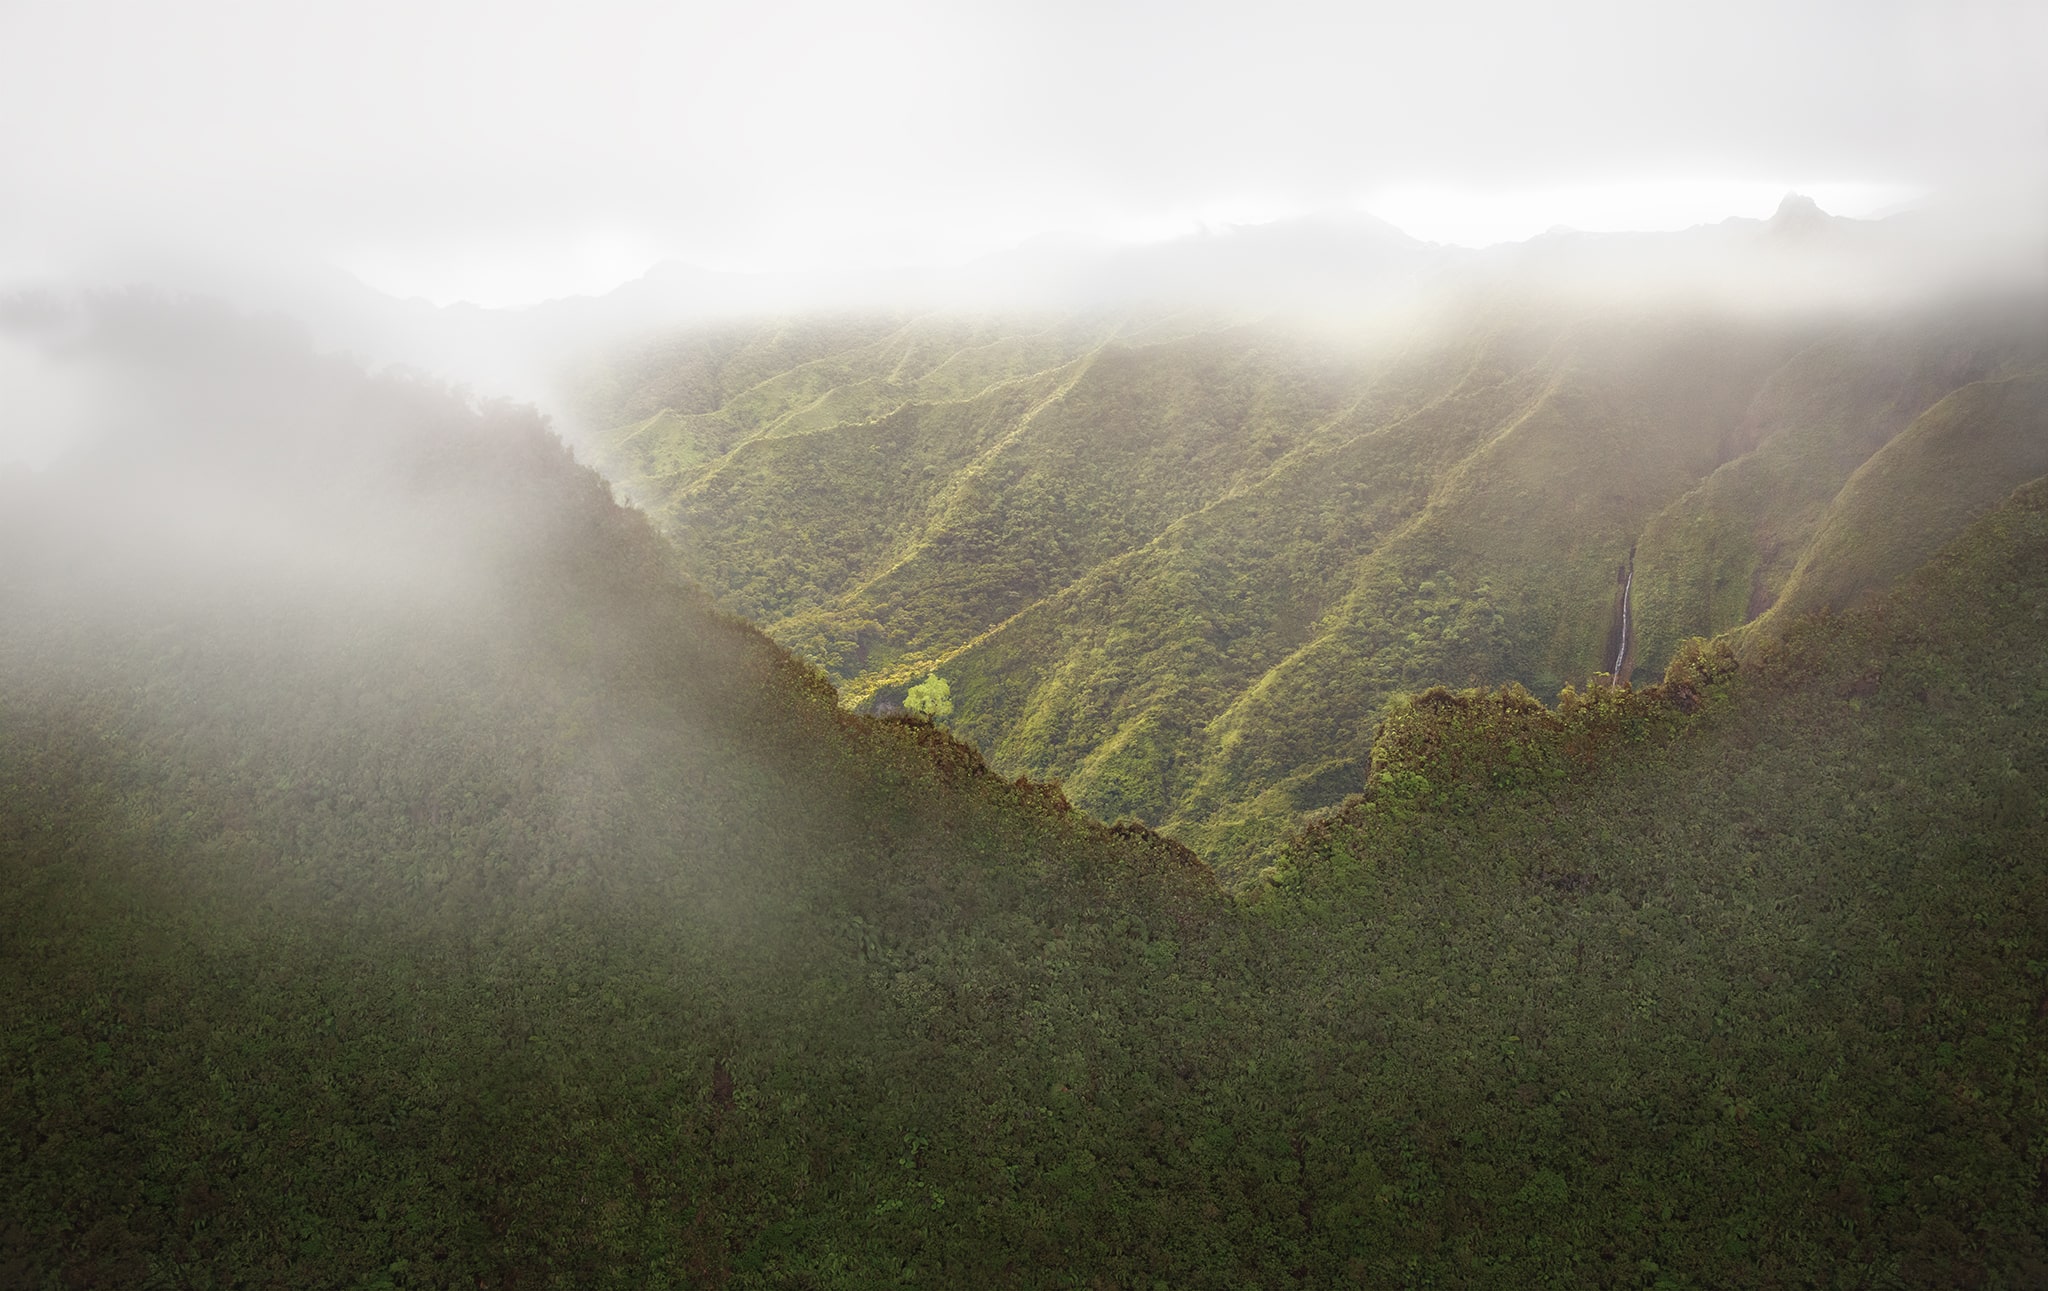 Tree and Waterfall on Cliffs in Kauai